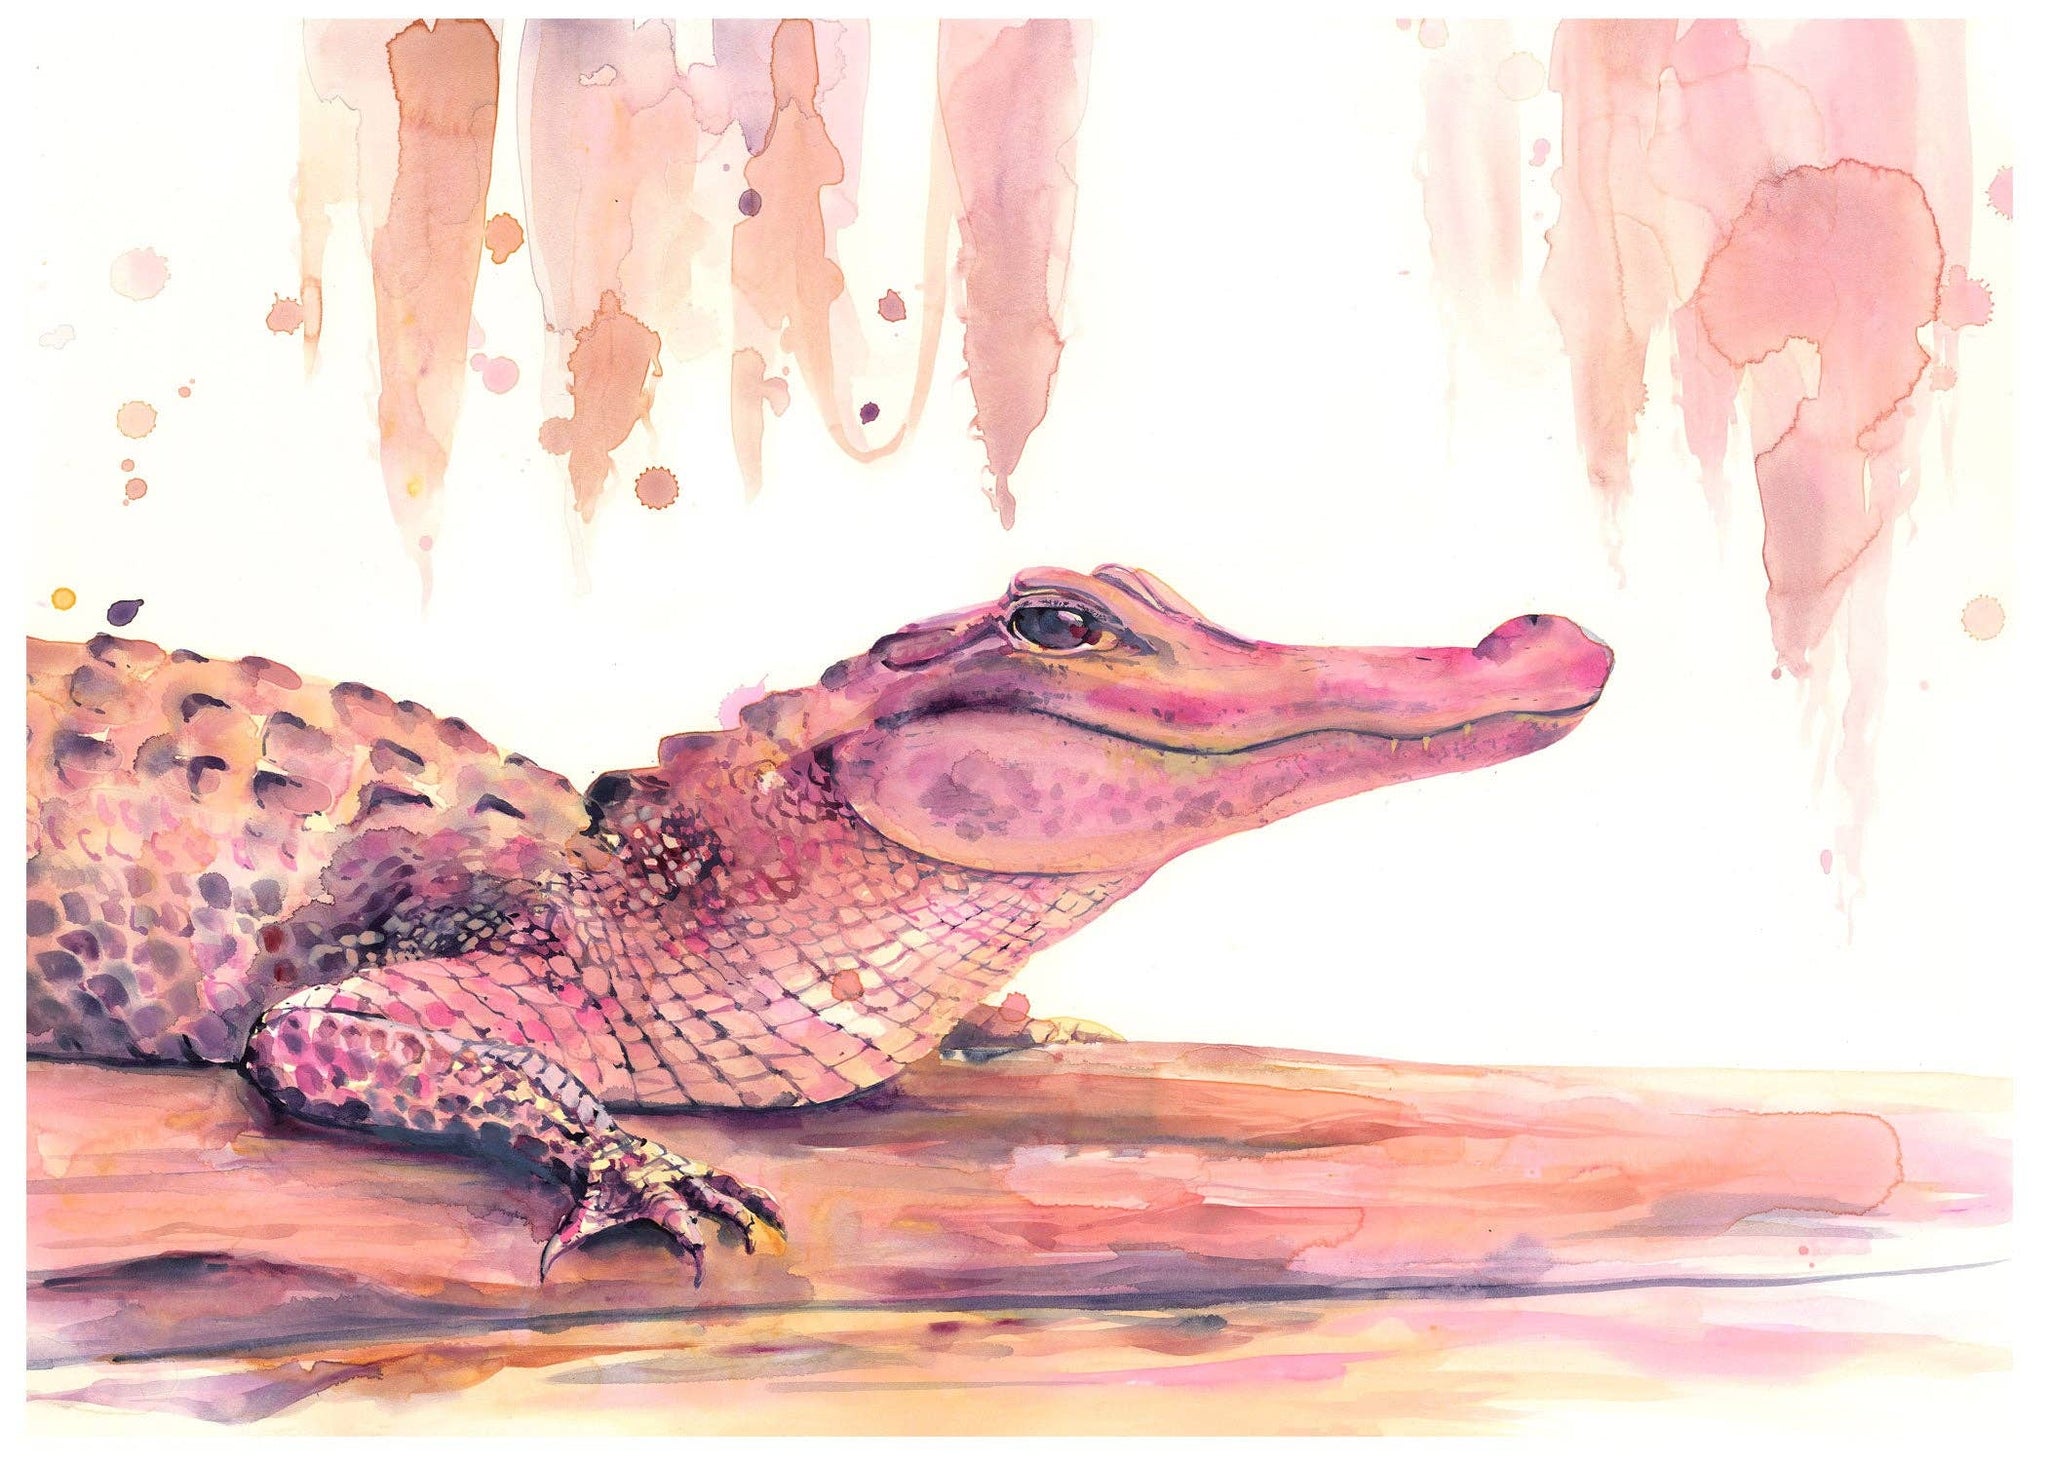 Pink Alligator Print by Lyla Clayre